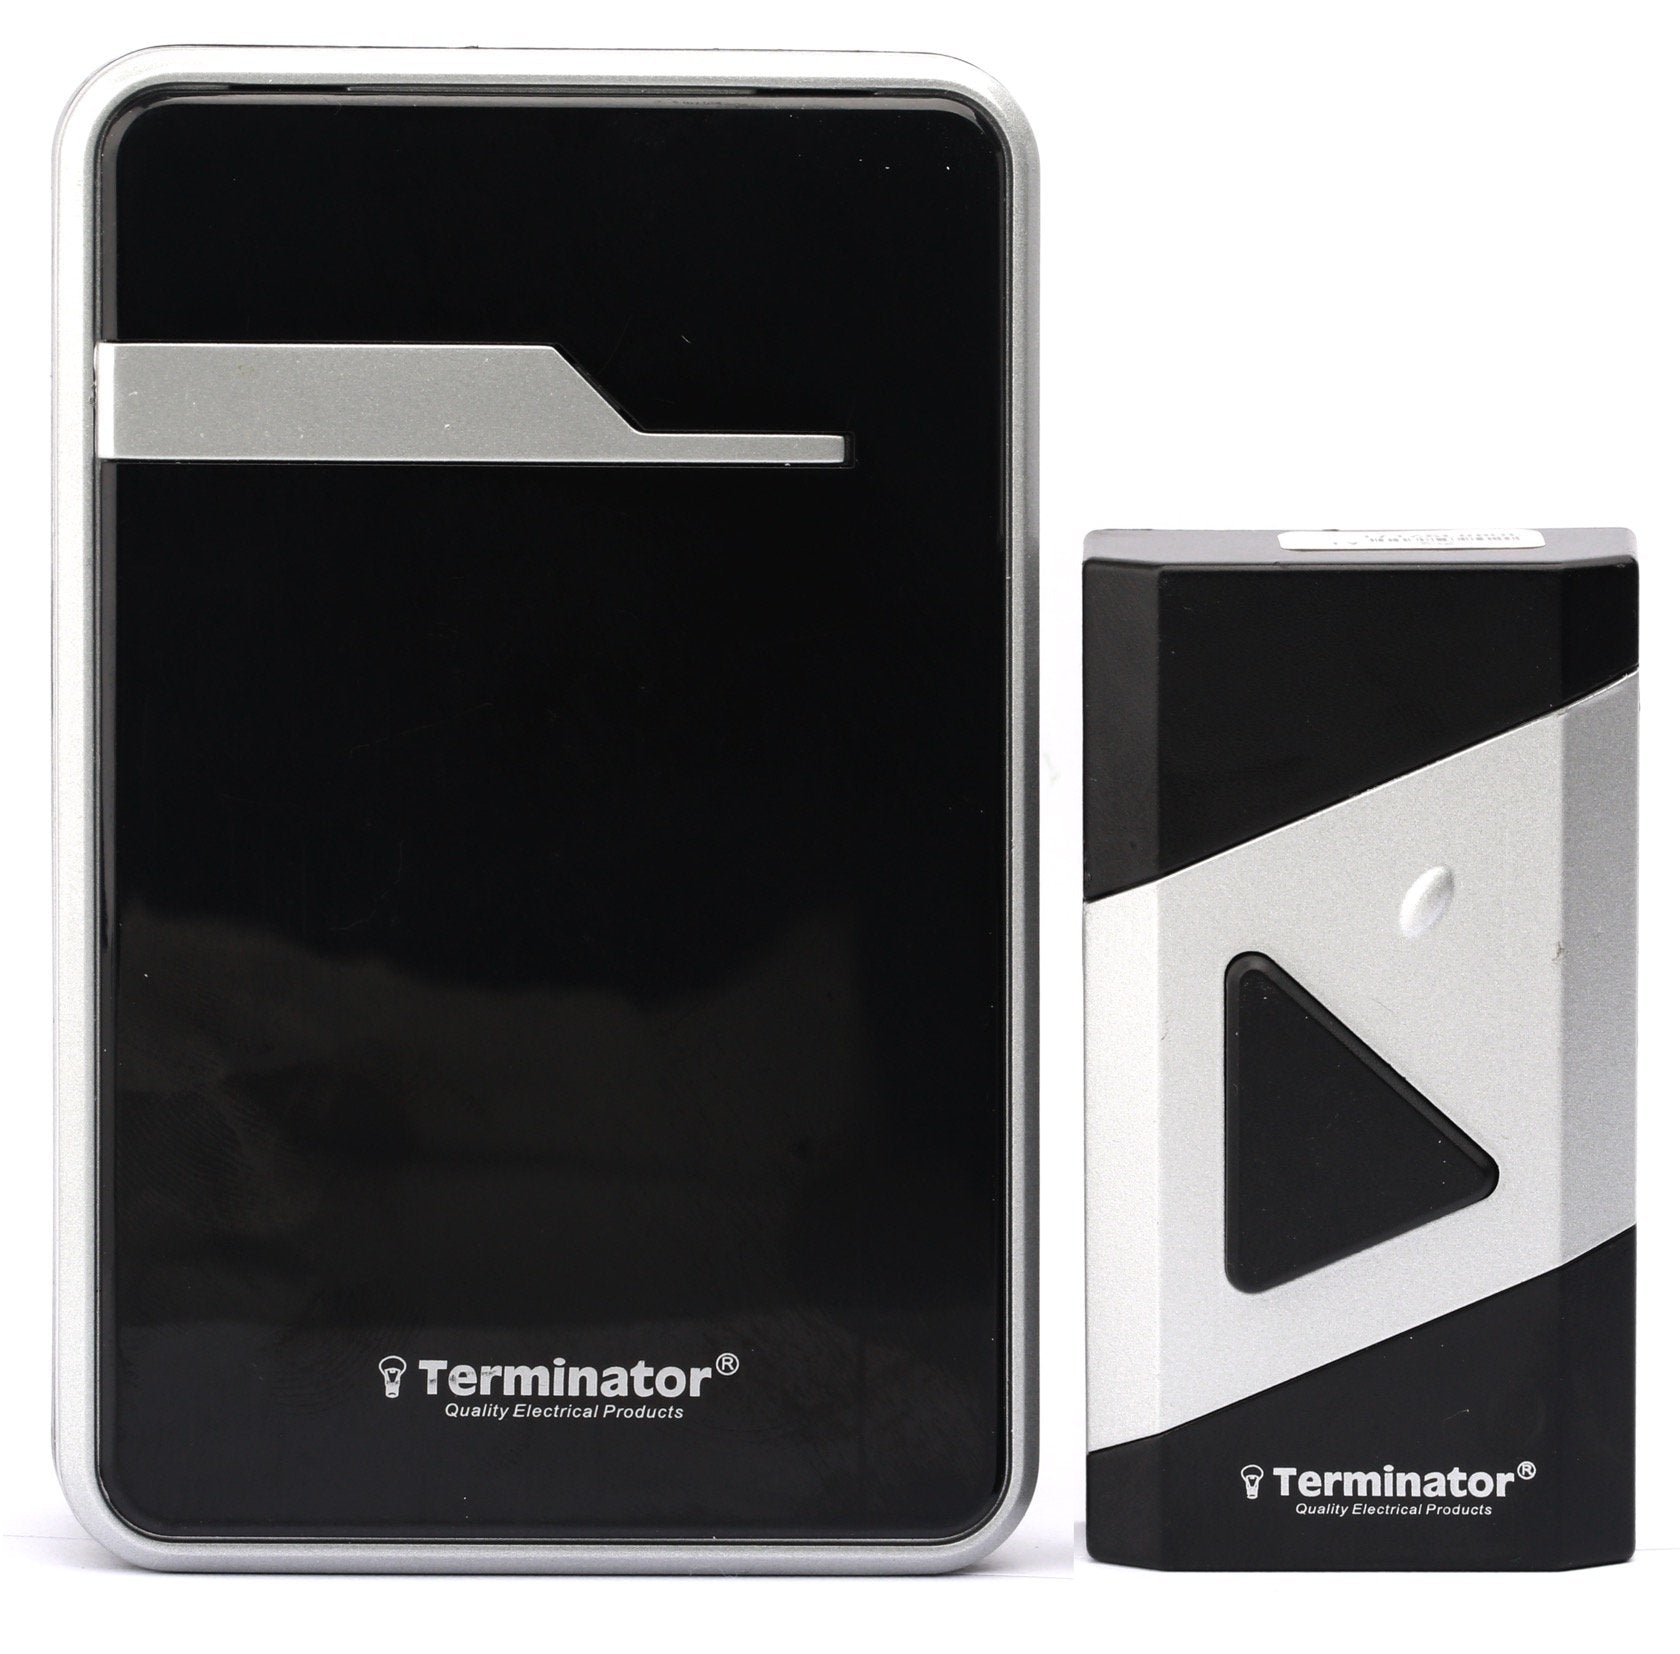 Terminator brand Digital Wireless Doorbell (38 Melodies) in Black body color.
Blister Packing TDB 019DC-B - Alibhai Shariff Direct